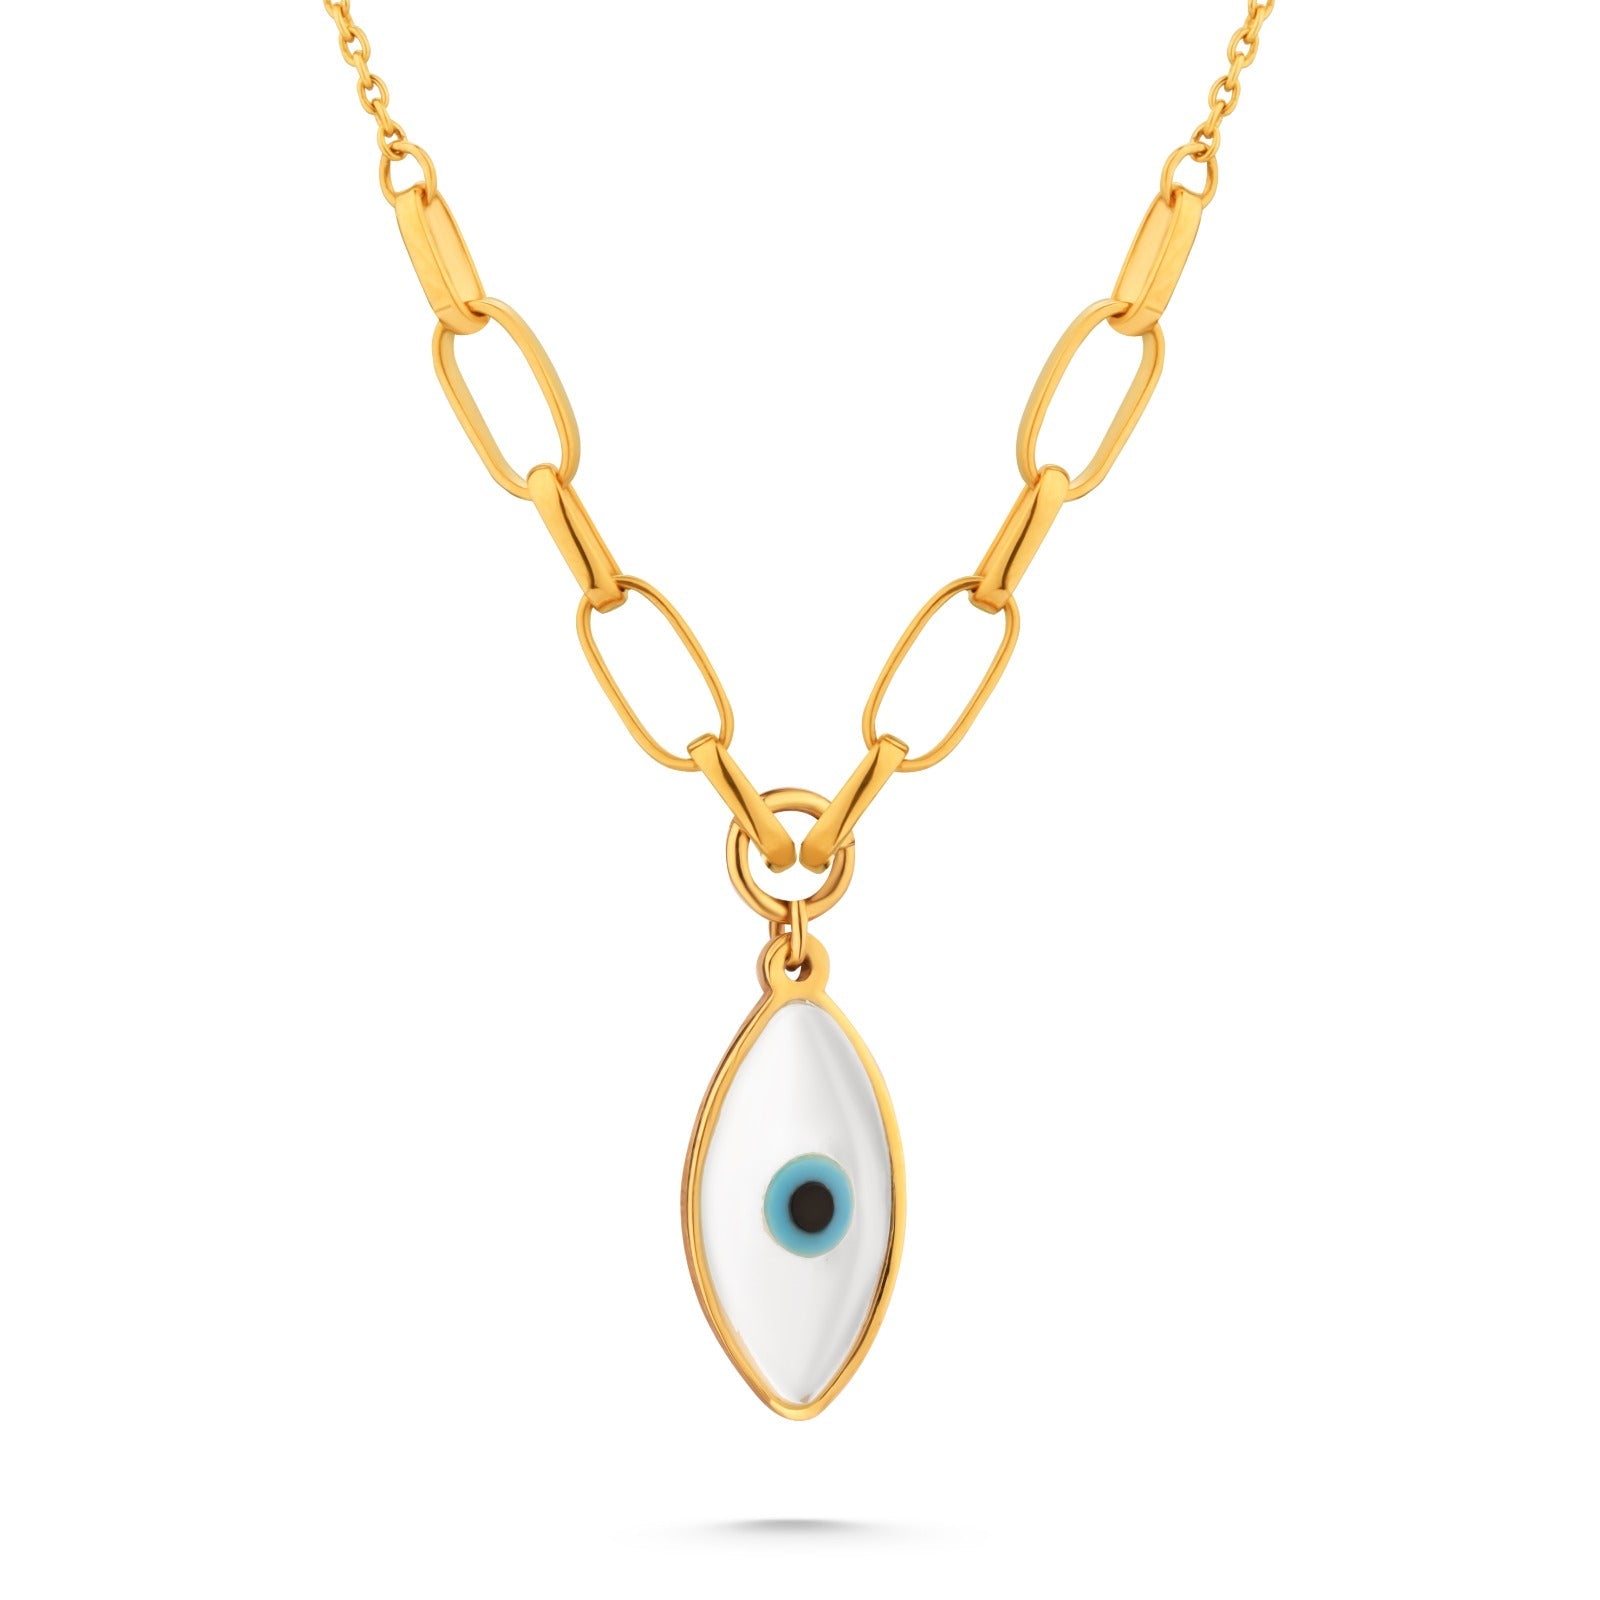 Evil eye dangling clips necklace in 18k Gold - J-S003PA